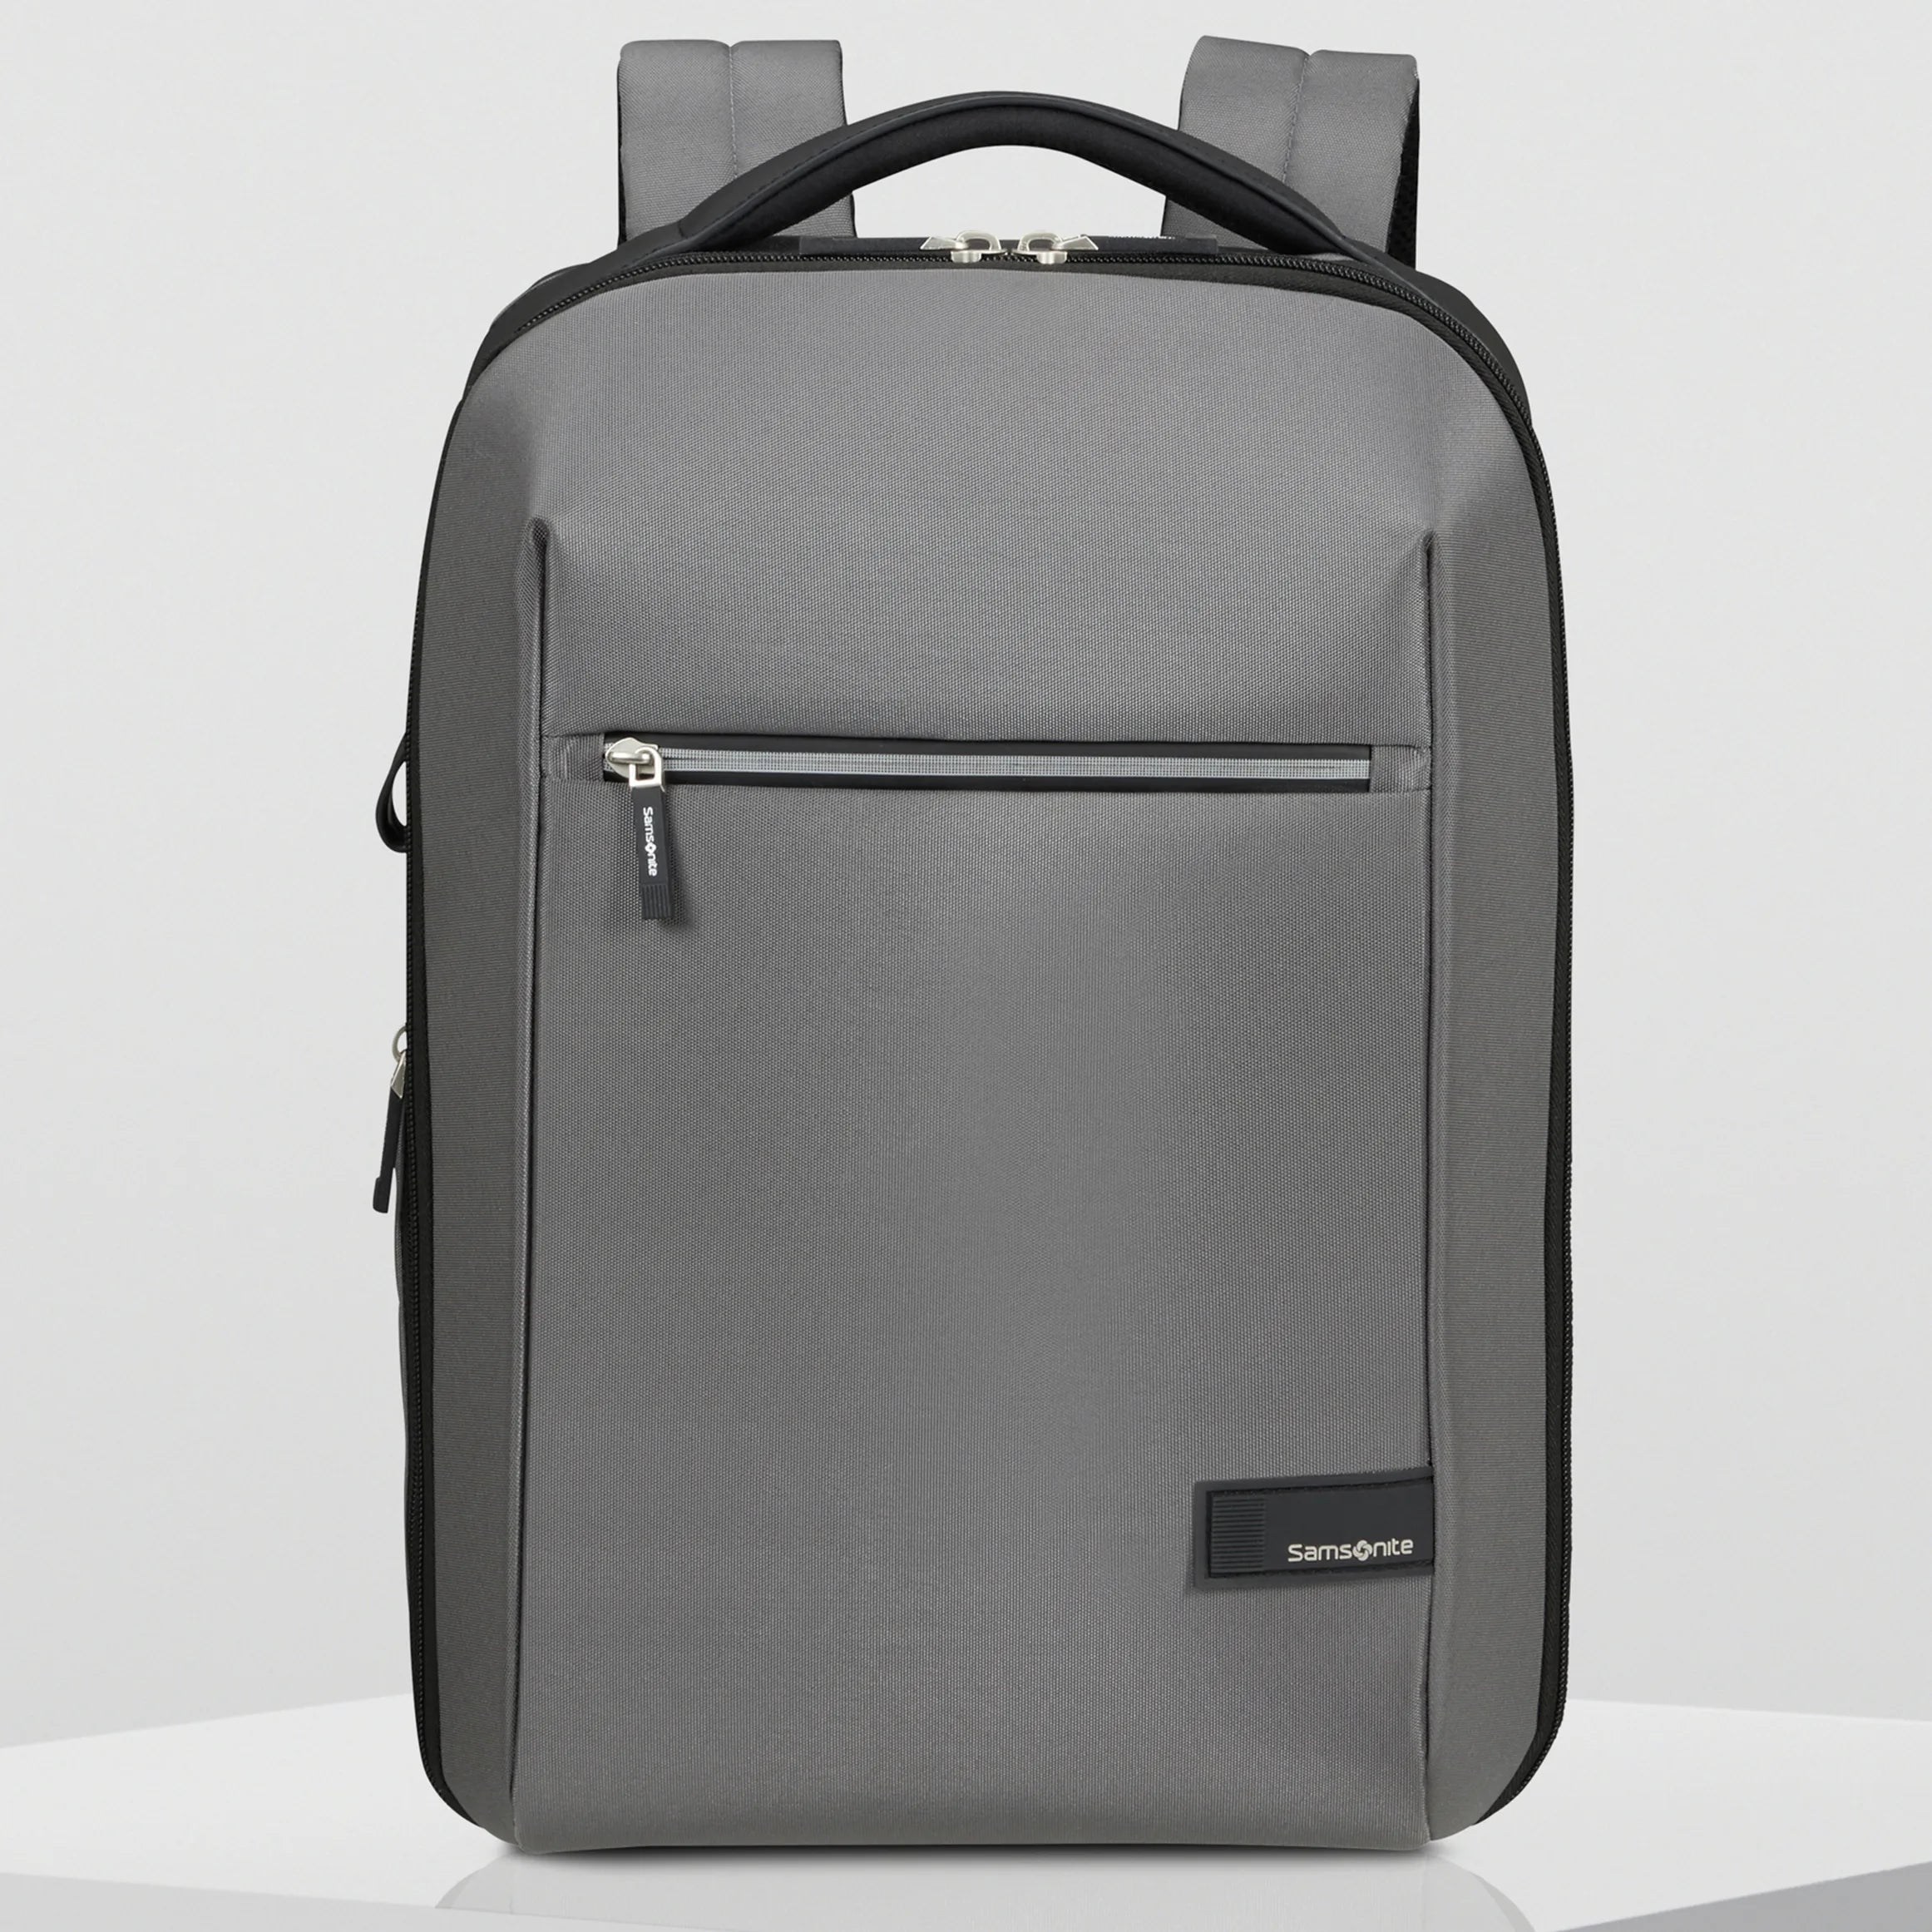 Samsonite Litepoint Laptop Backpack 43 cm - Grey